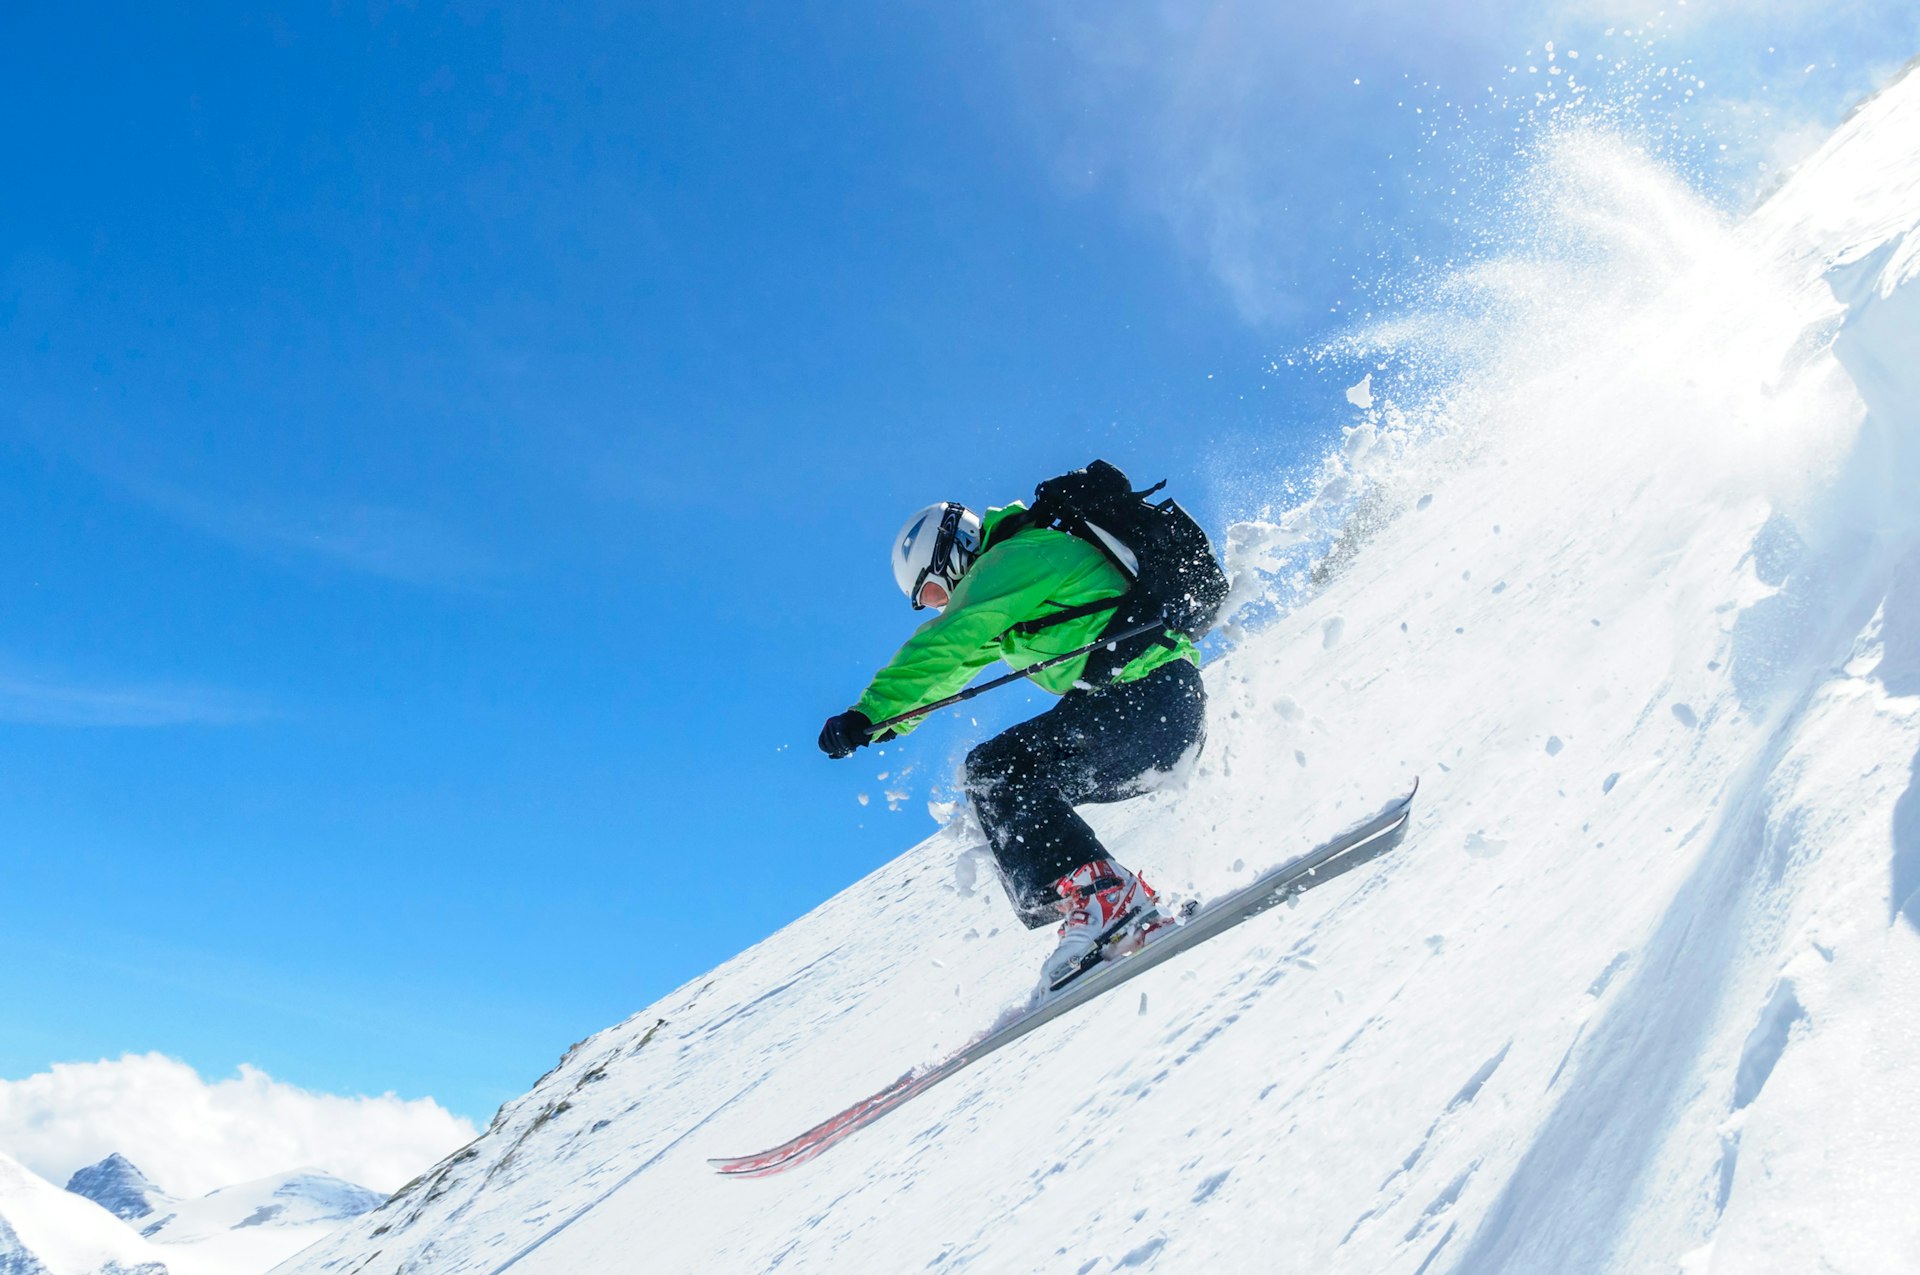 Skier on a steep slope at Ktzsteinhorn in Austria